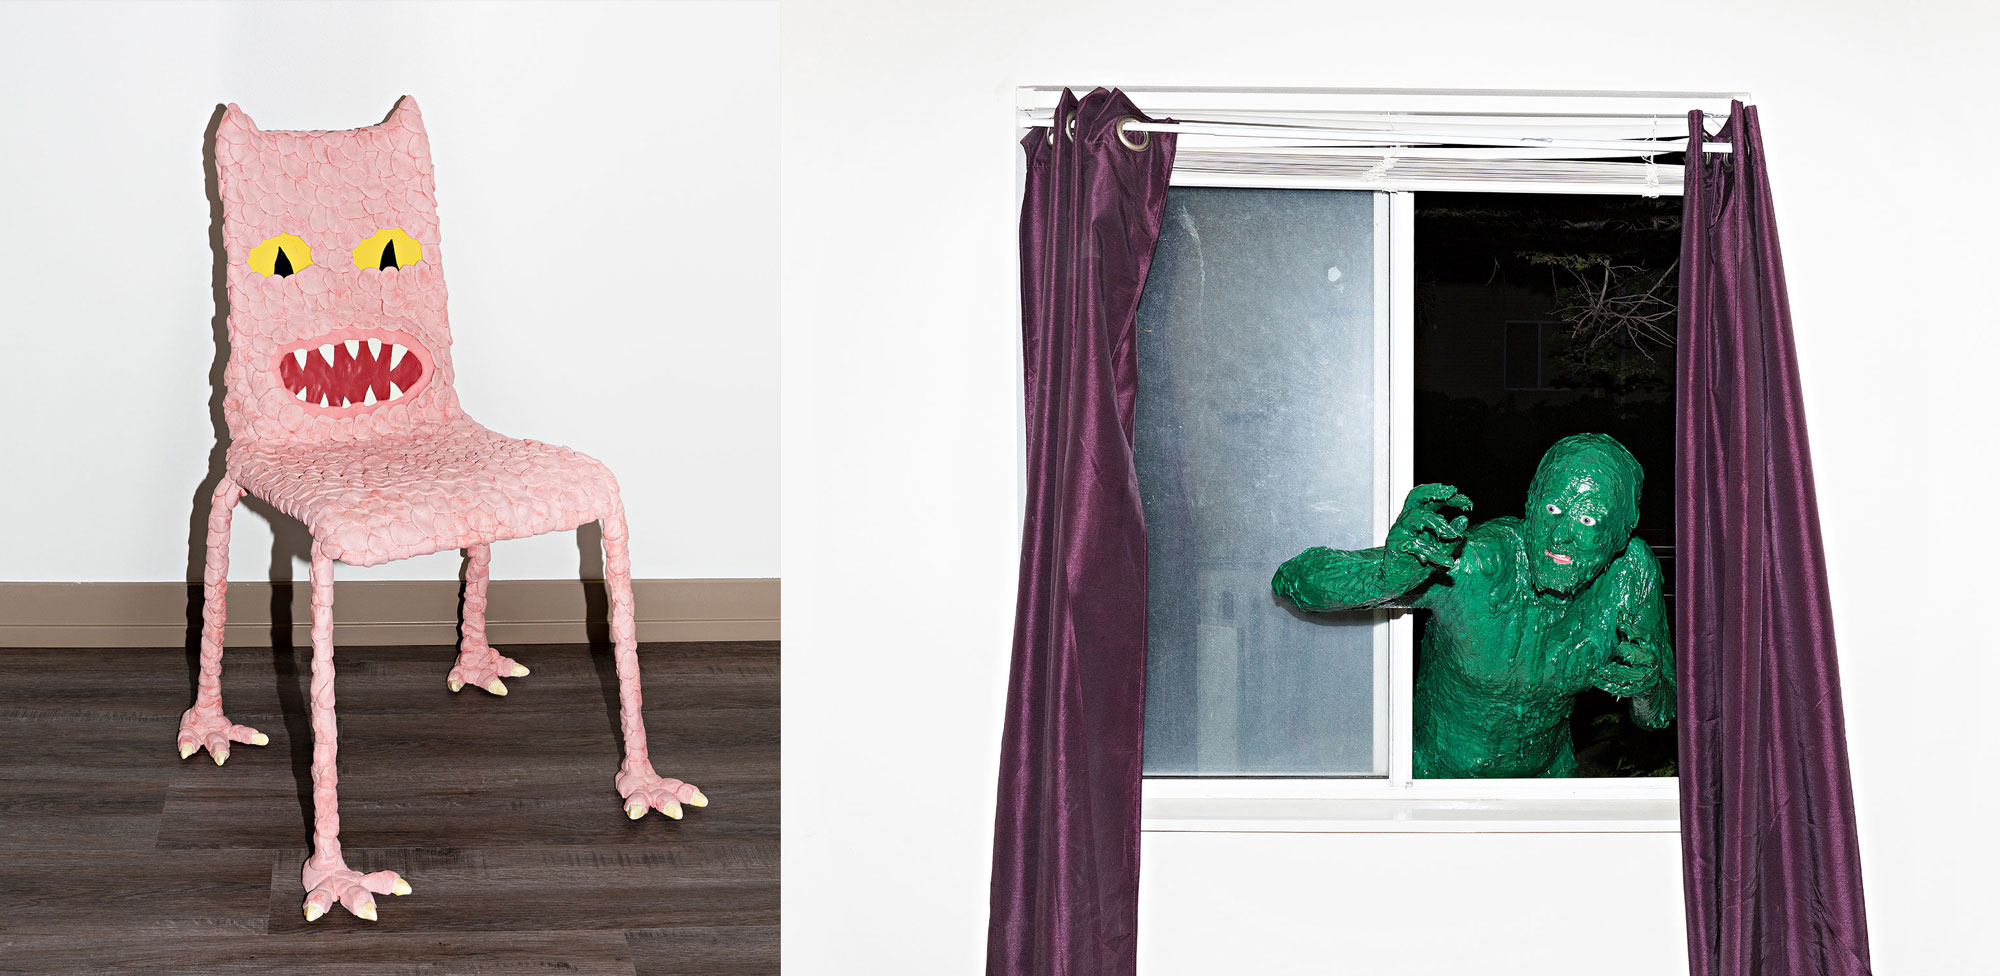 Left: Jacob Haupt, Demon Chair, 2020 / Right: Window Creep, 2017